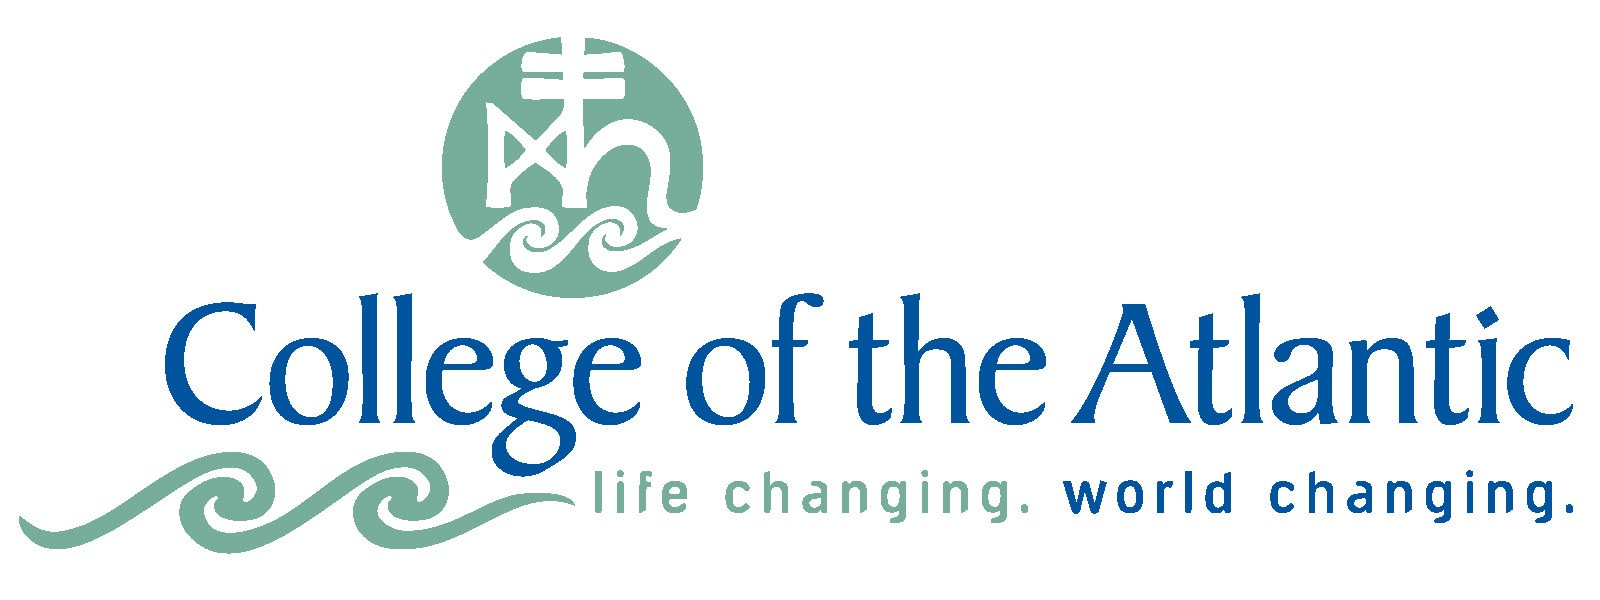 college of the atlantic logo